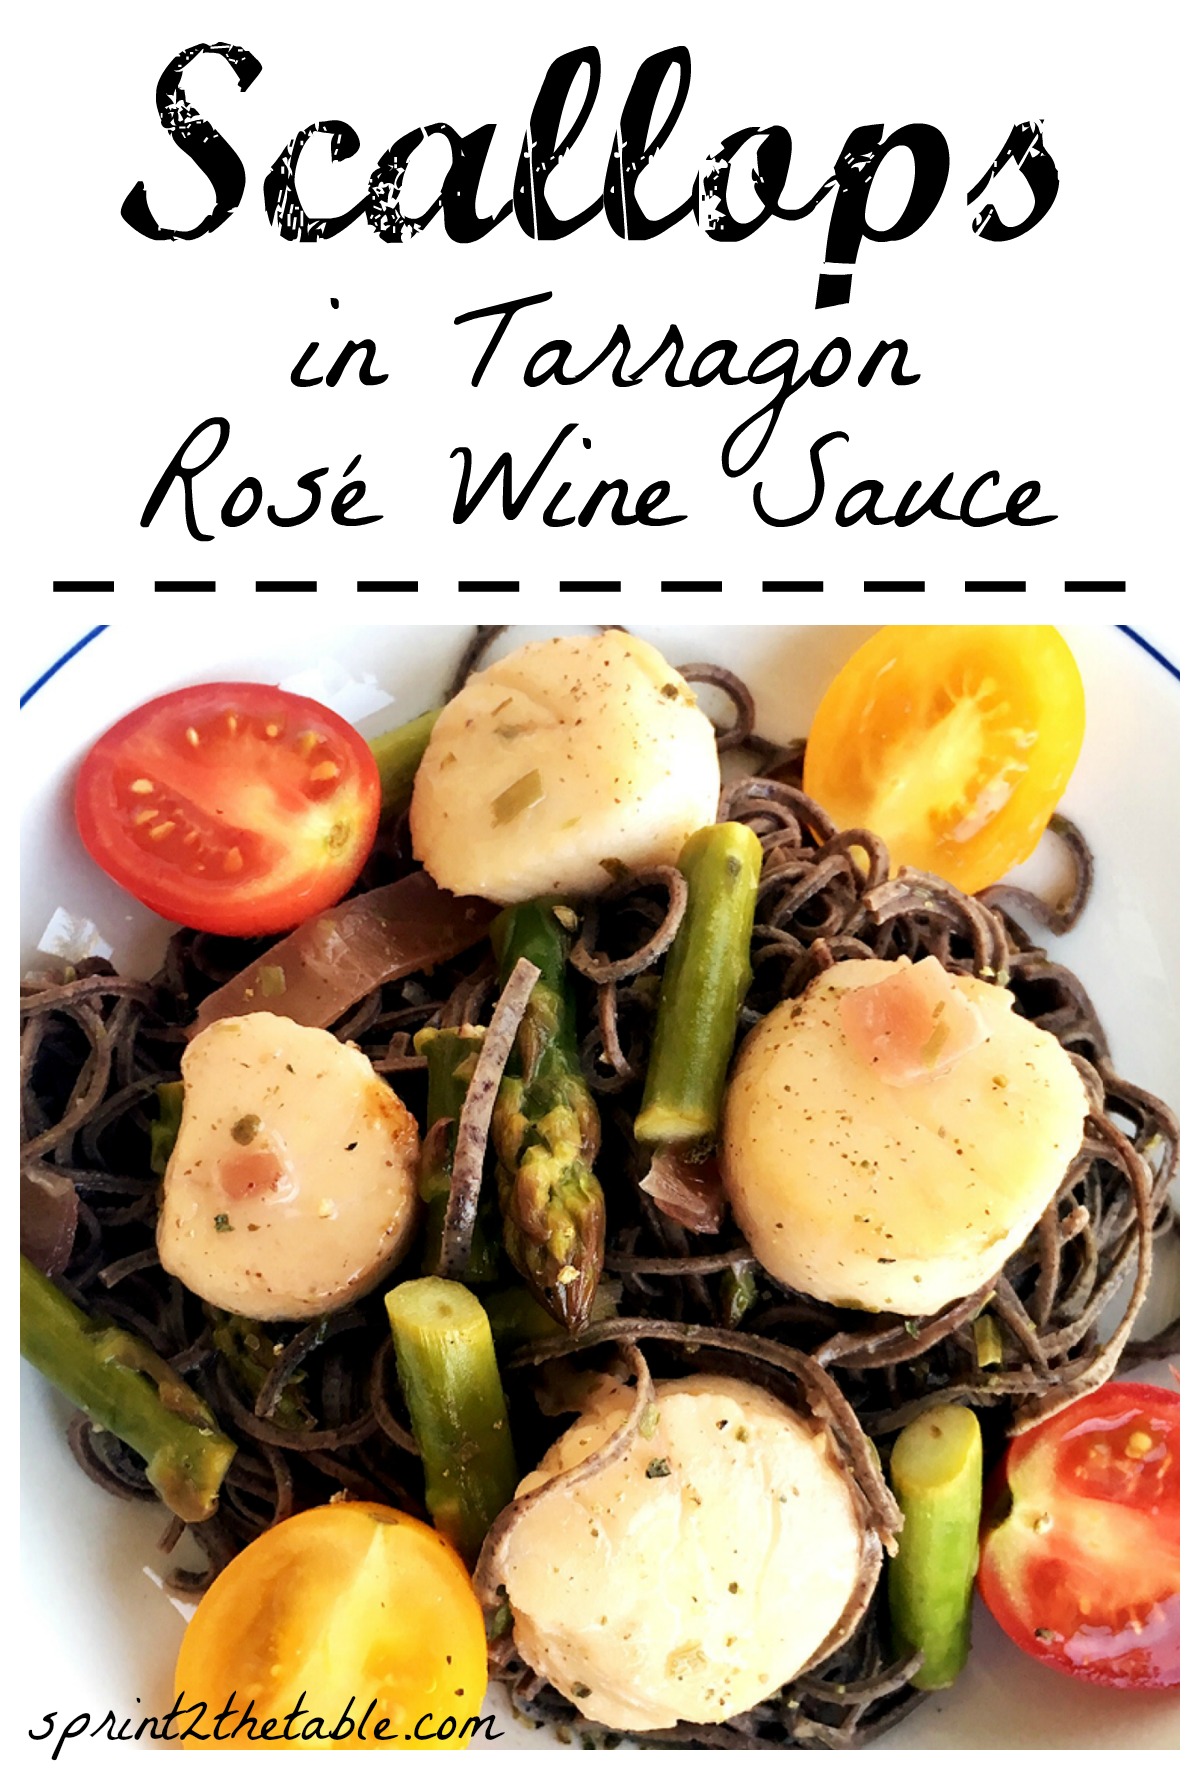 Leftover wine? This easy Sea Scallop in Tarragon Rosé Wine Sauce recipe!